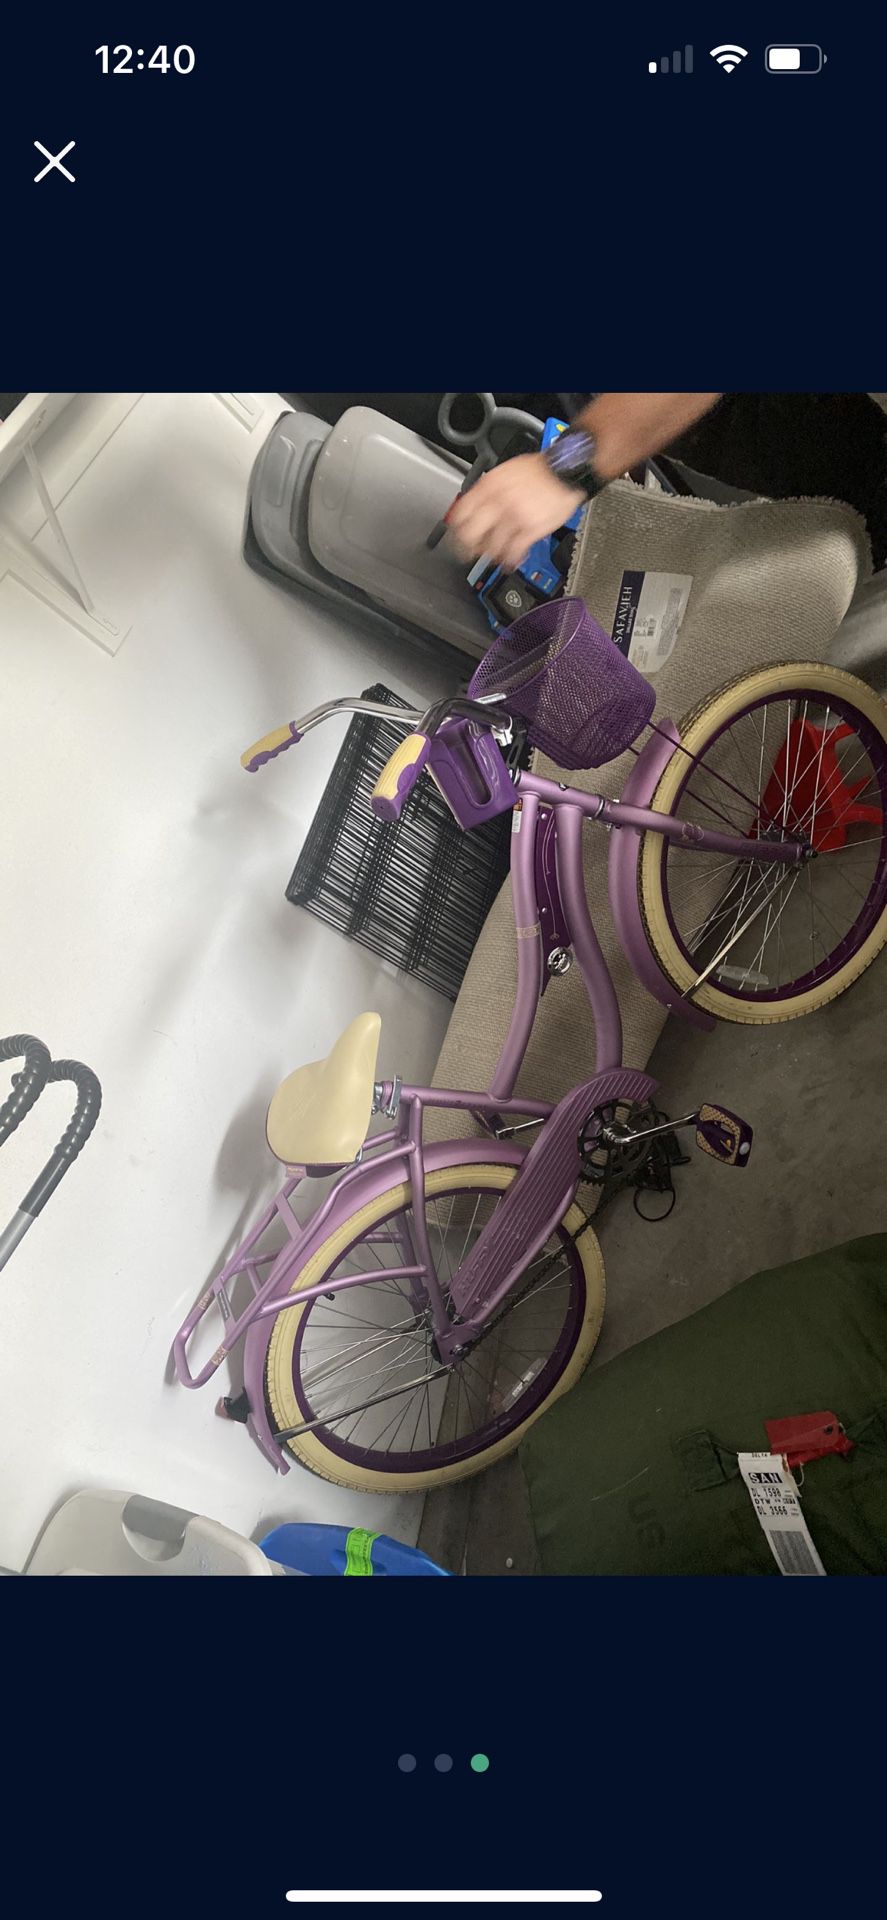 Huffy 24" Nel Lusso Girls' Cruiser Bike, Purple Satin